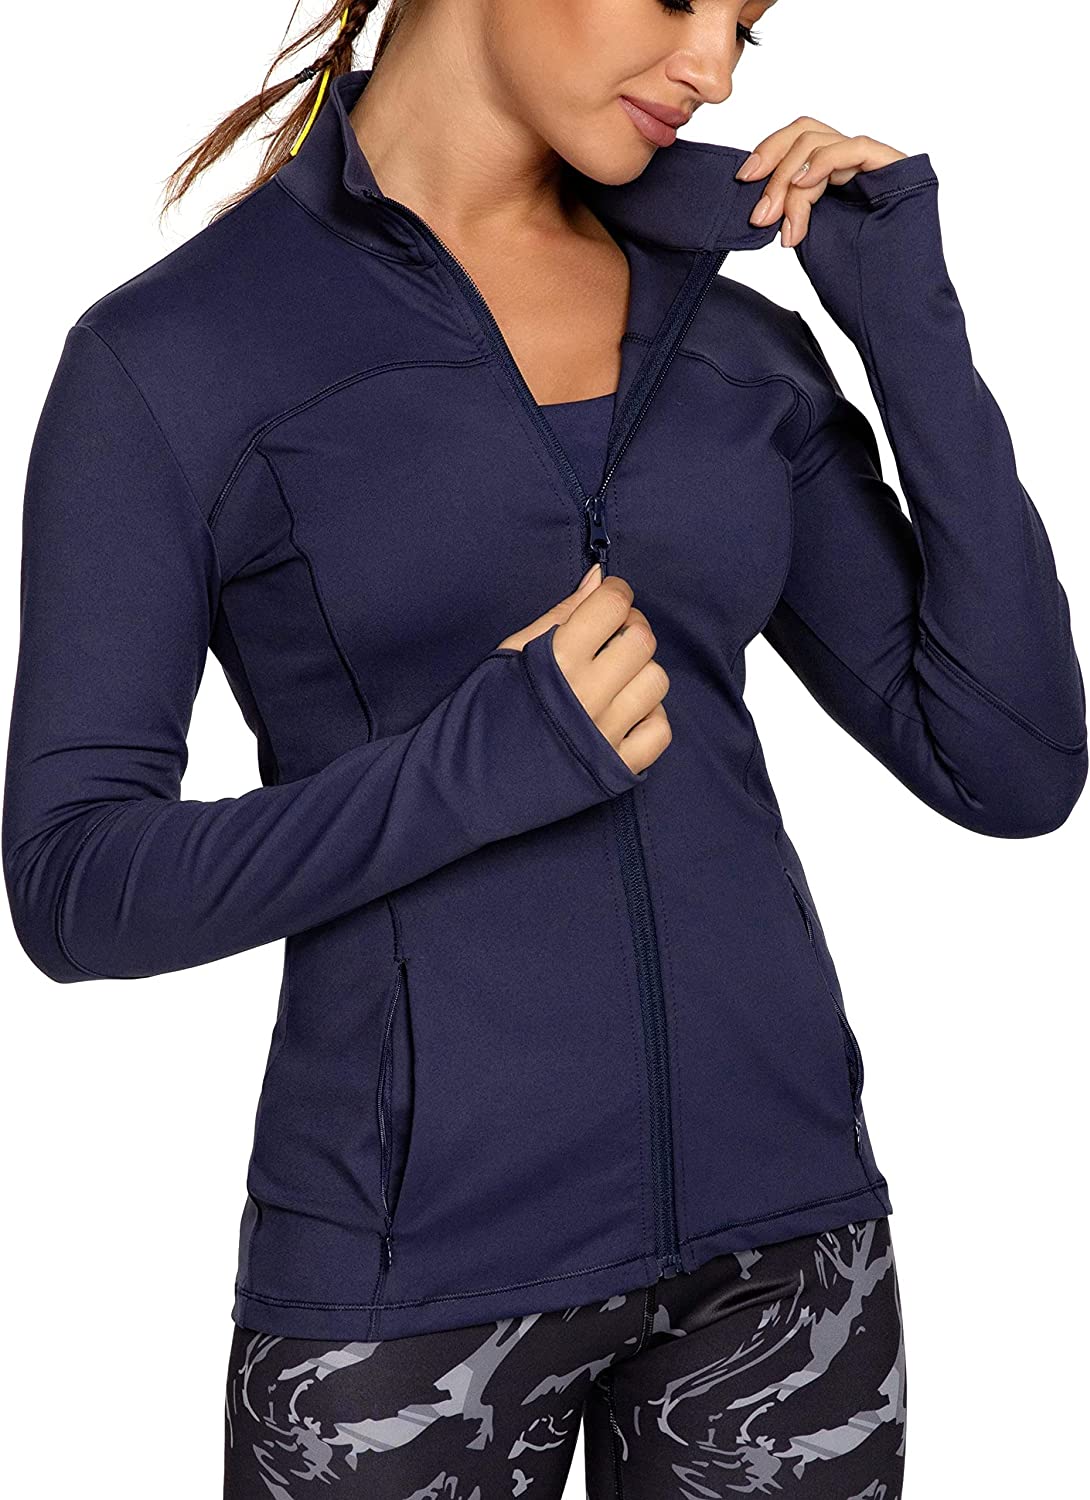 QUEENIEKE Running Jackets for Women, Cottony-Soft Full Zip Slim Fit Athletic  Wor